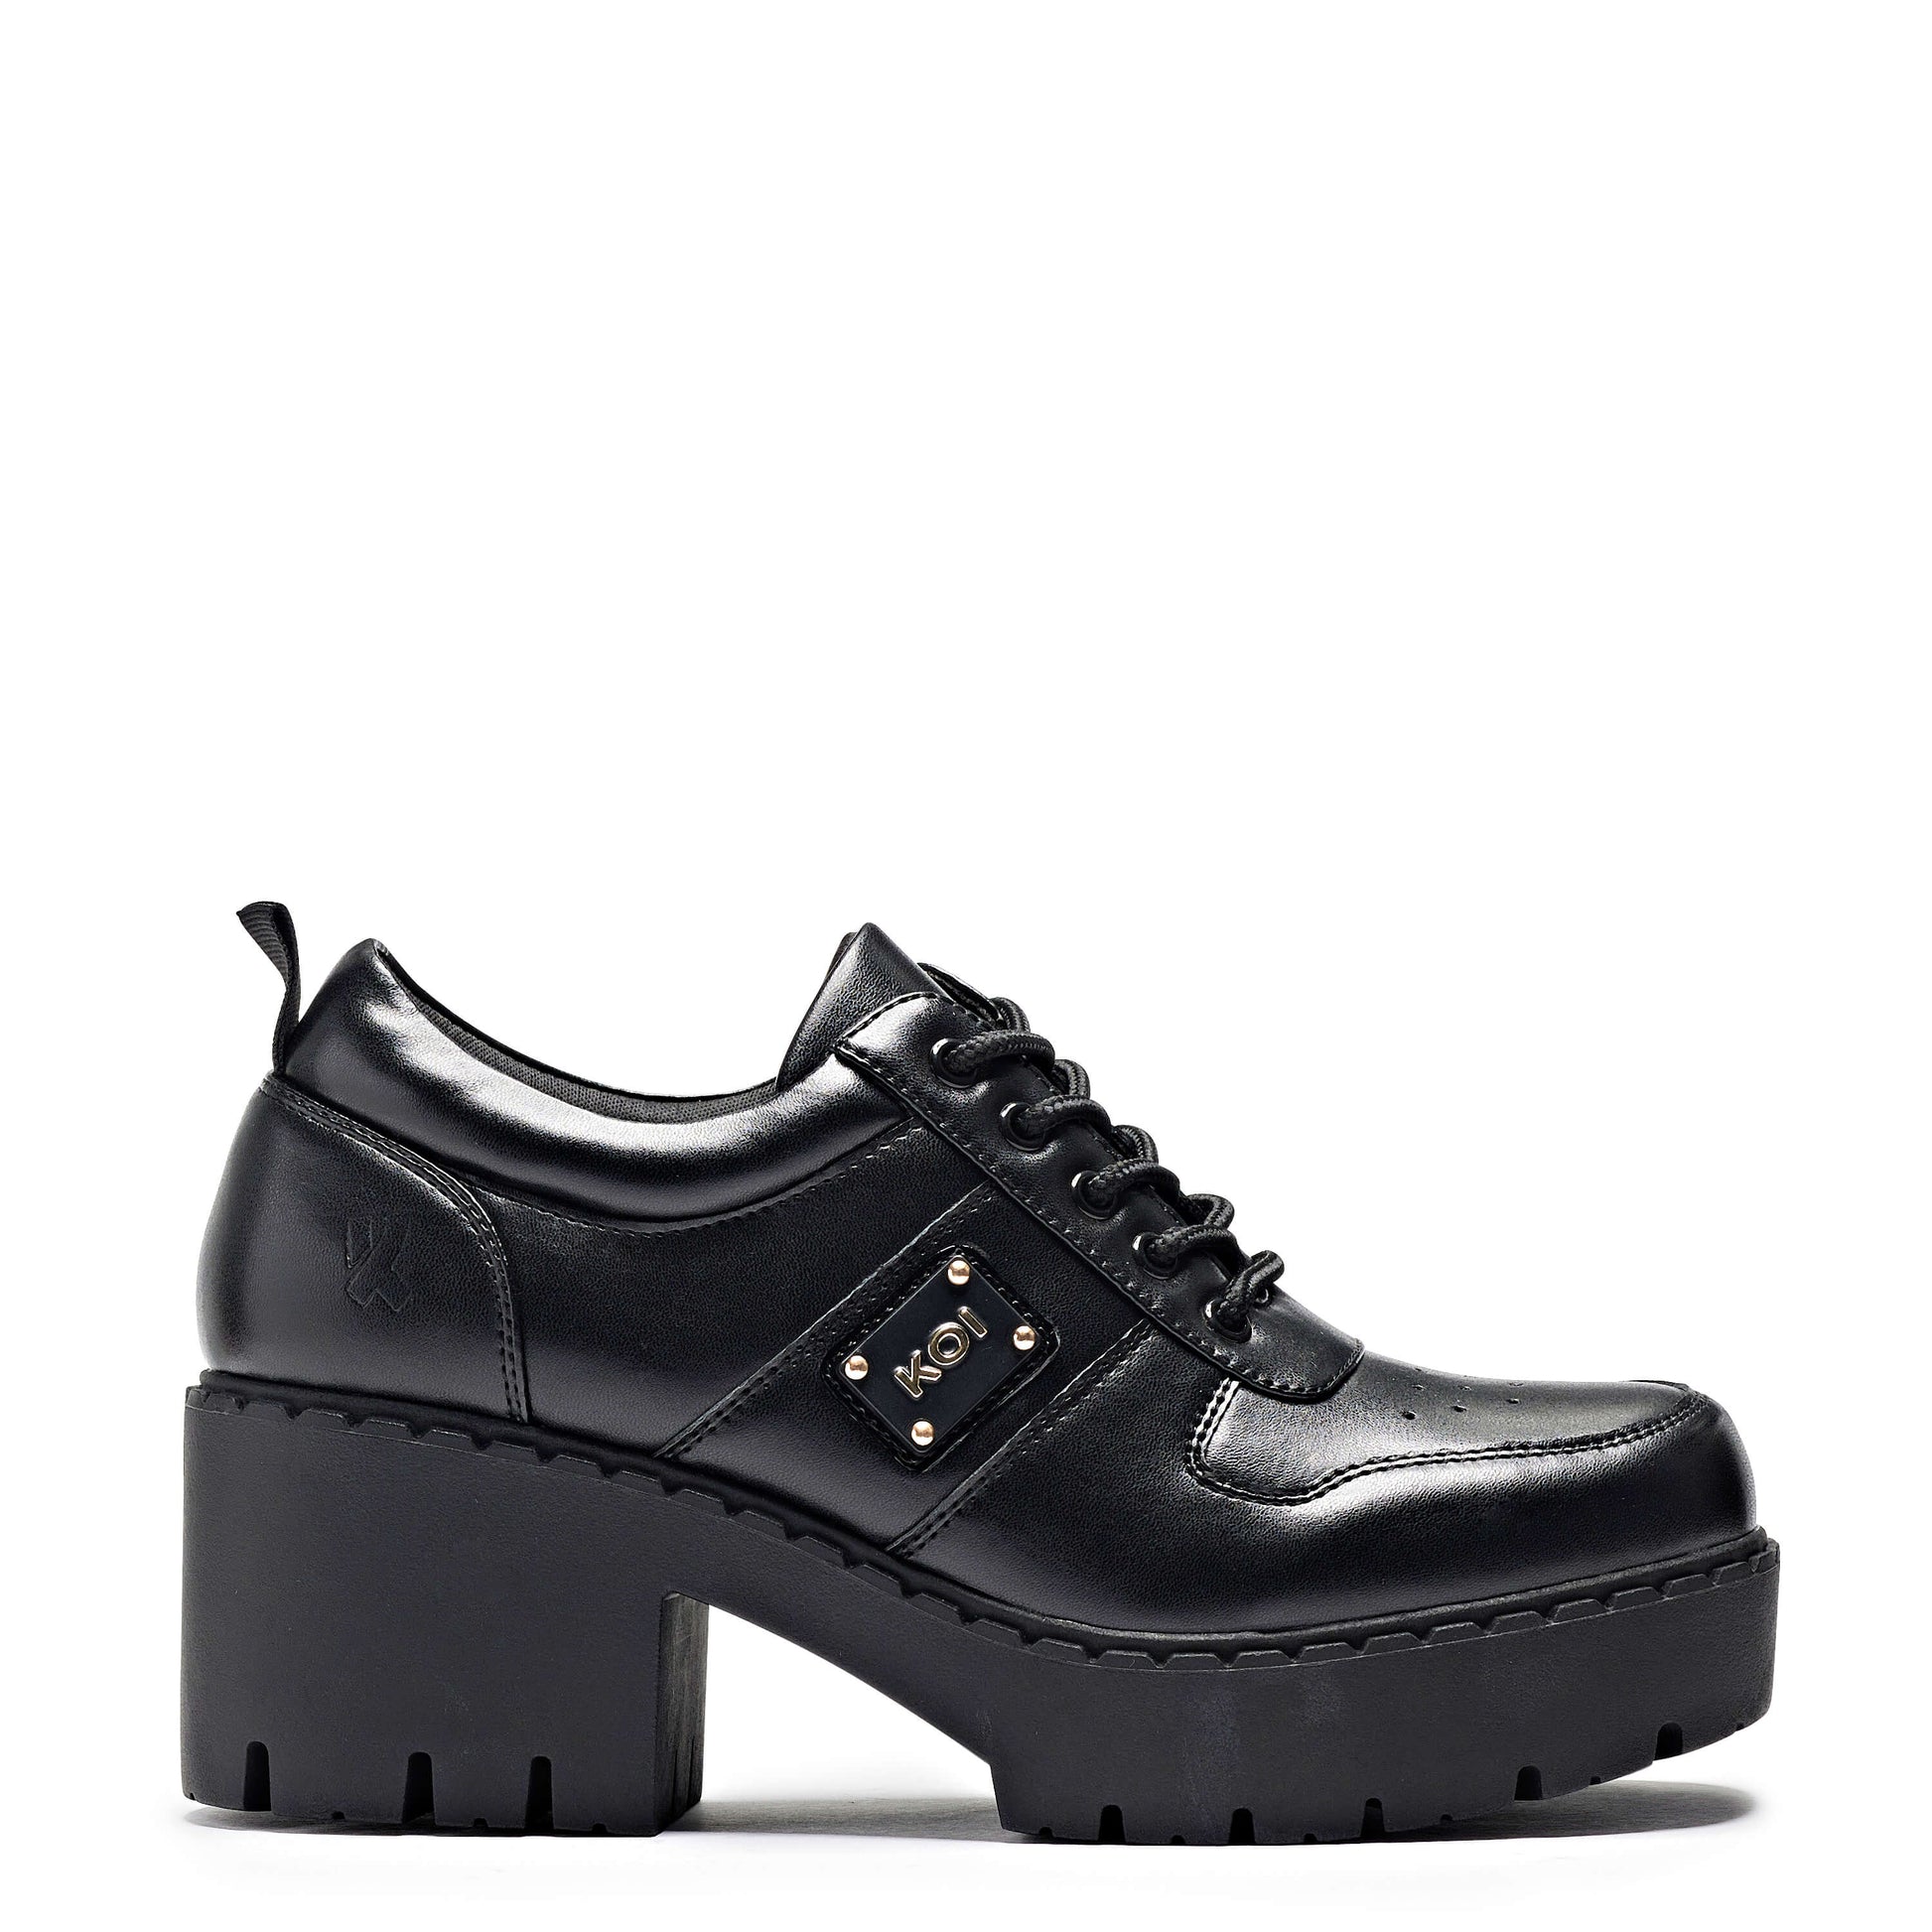 Oshan Koi Switch Shoes - Shoes - KOI Footwear - Black - Side View